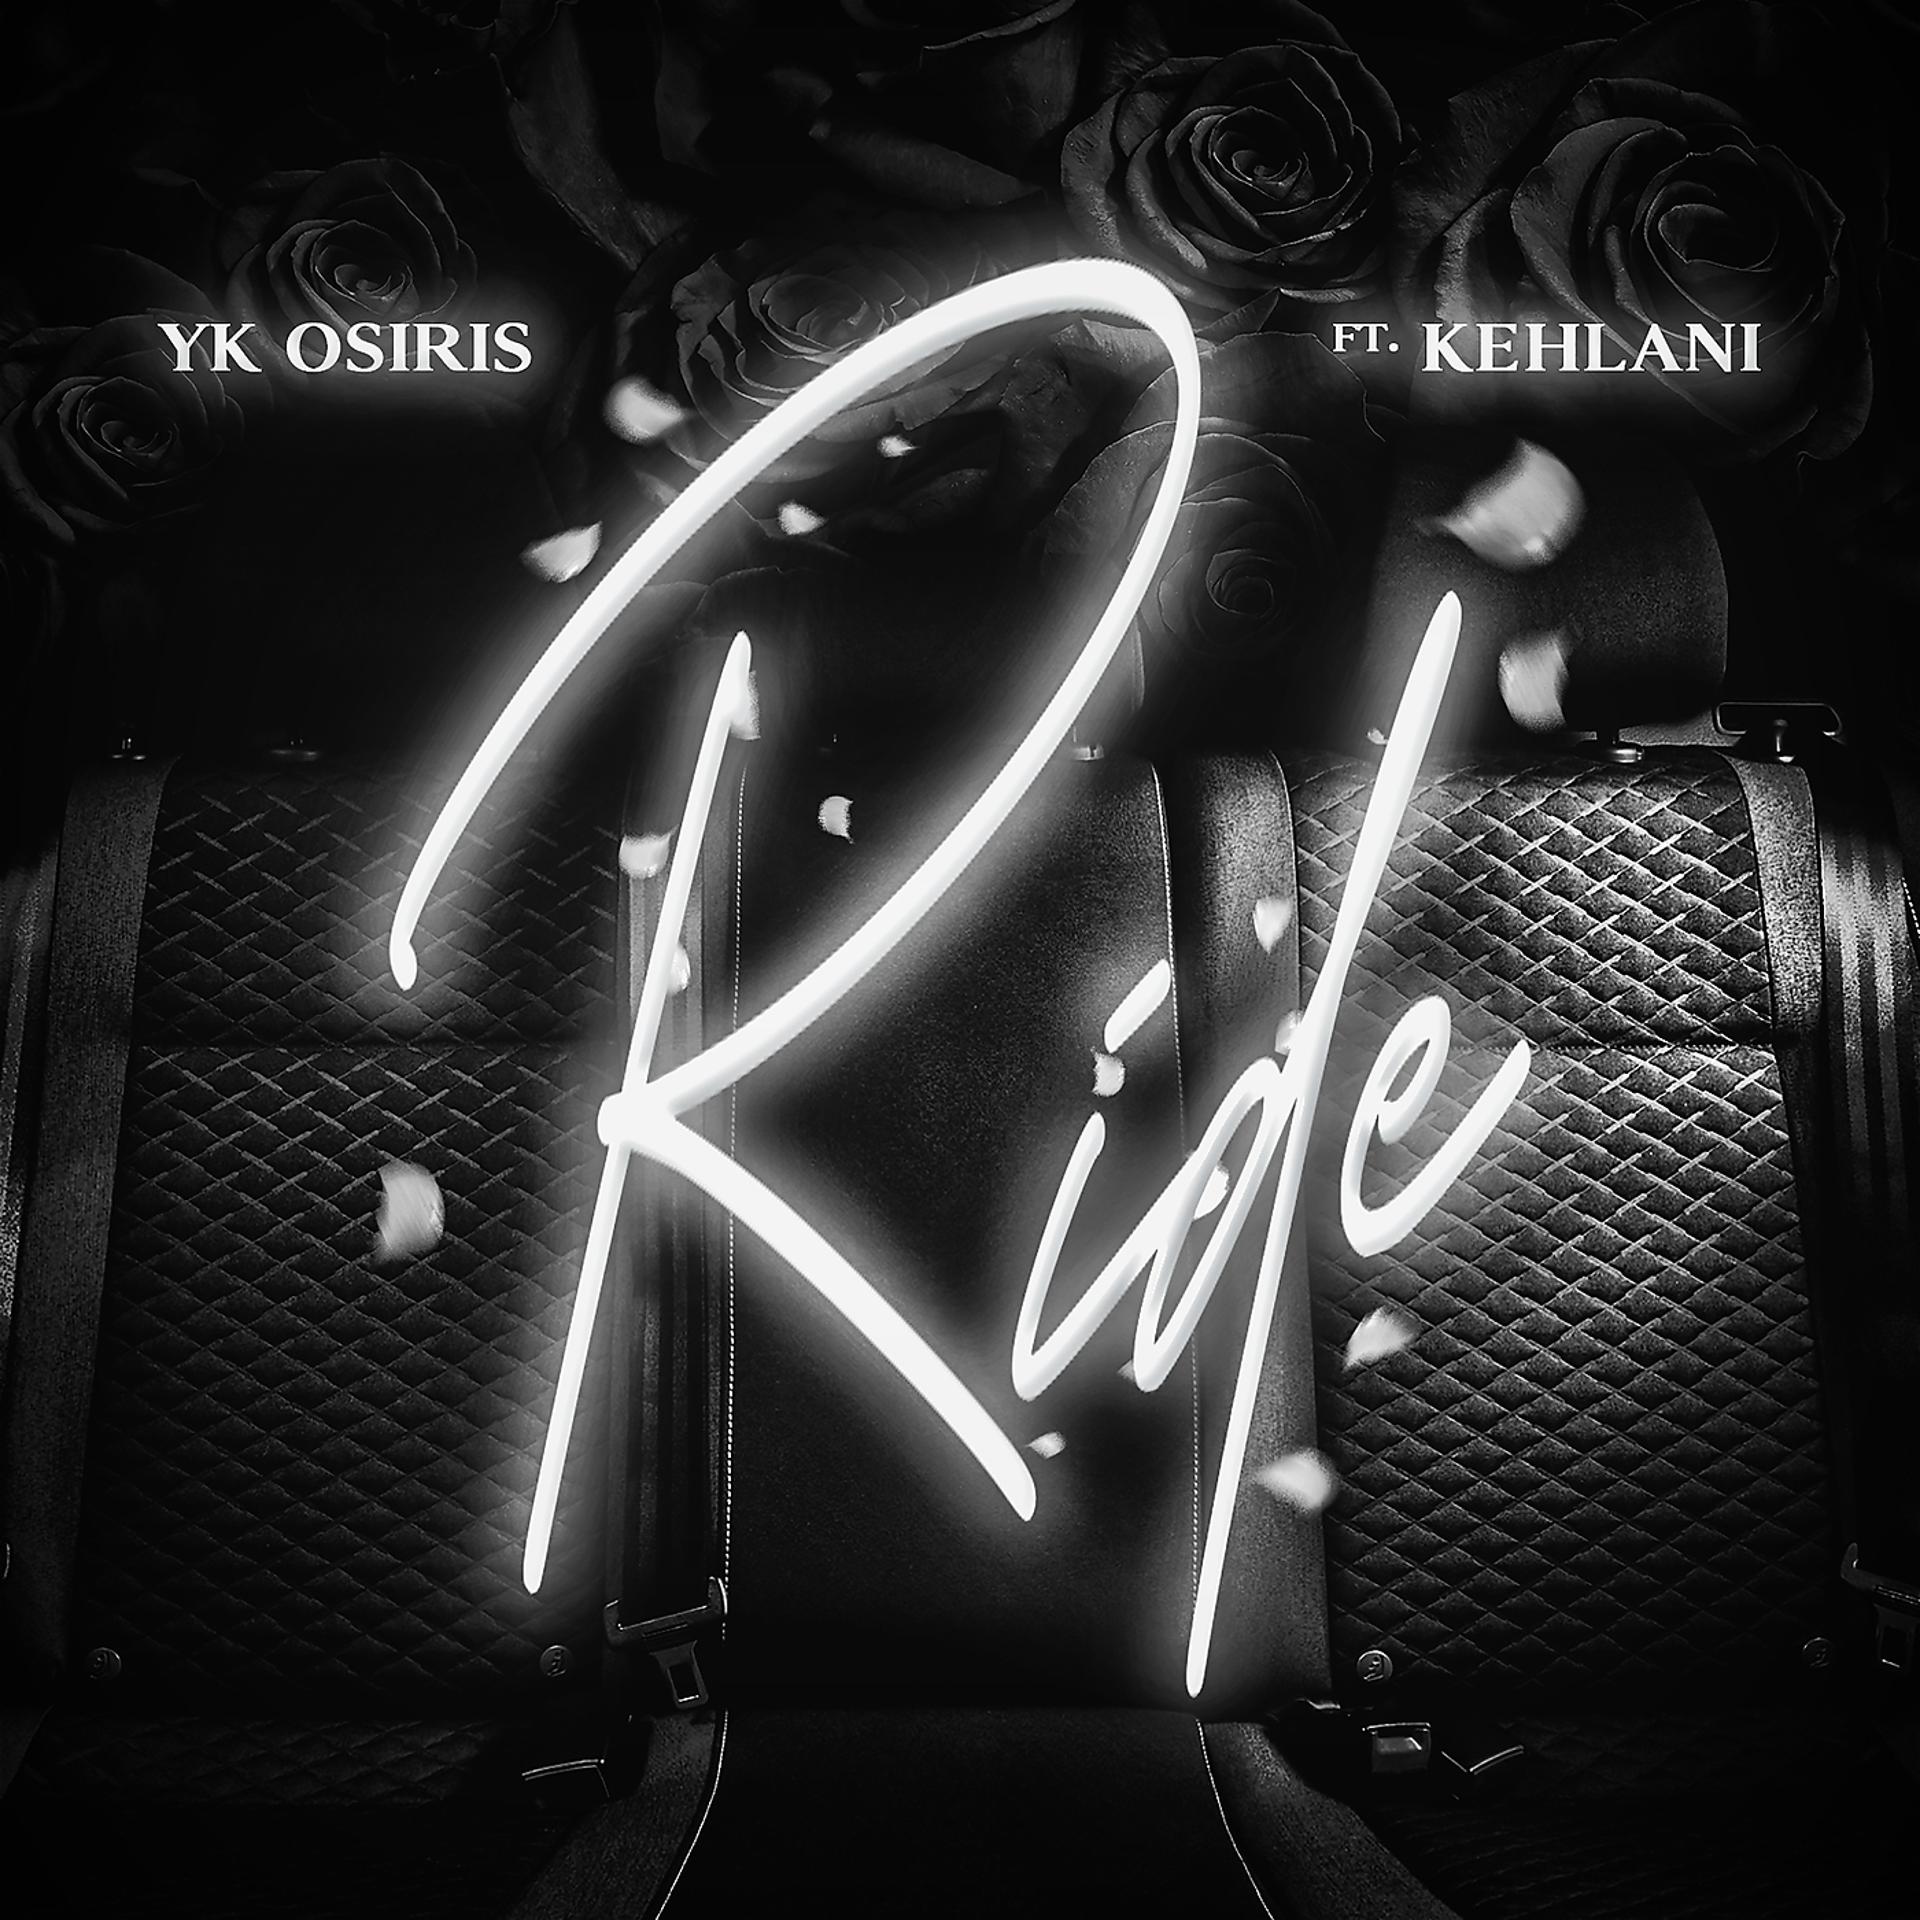 Feat riders. YK Osiris. RNB. Osiris фото музыка. Минусы Osiris в.